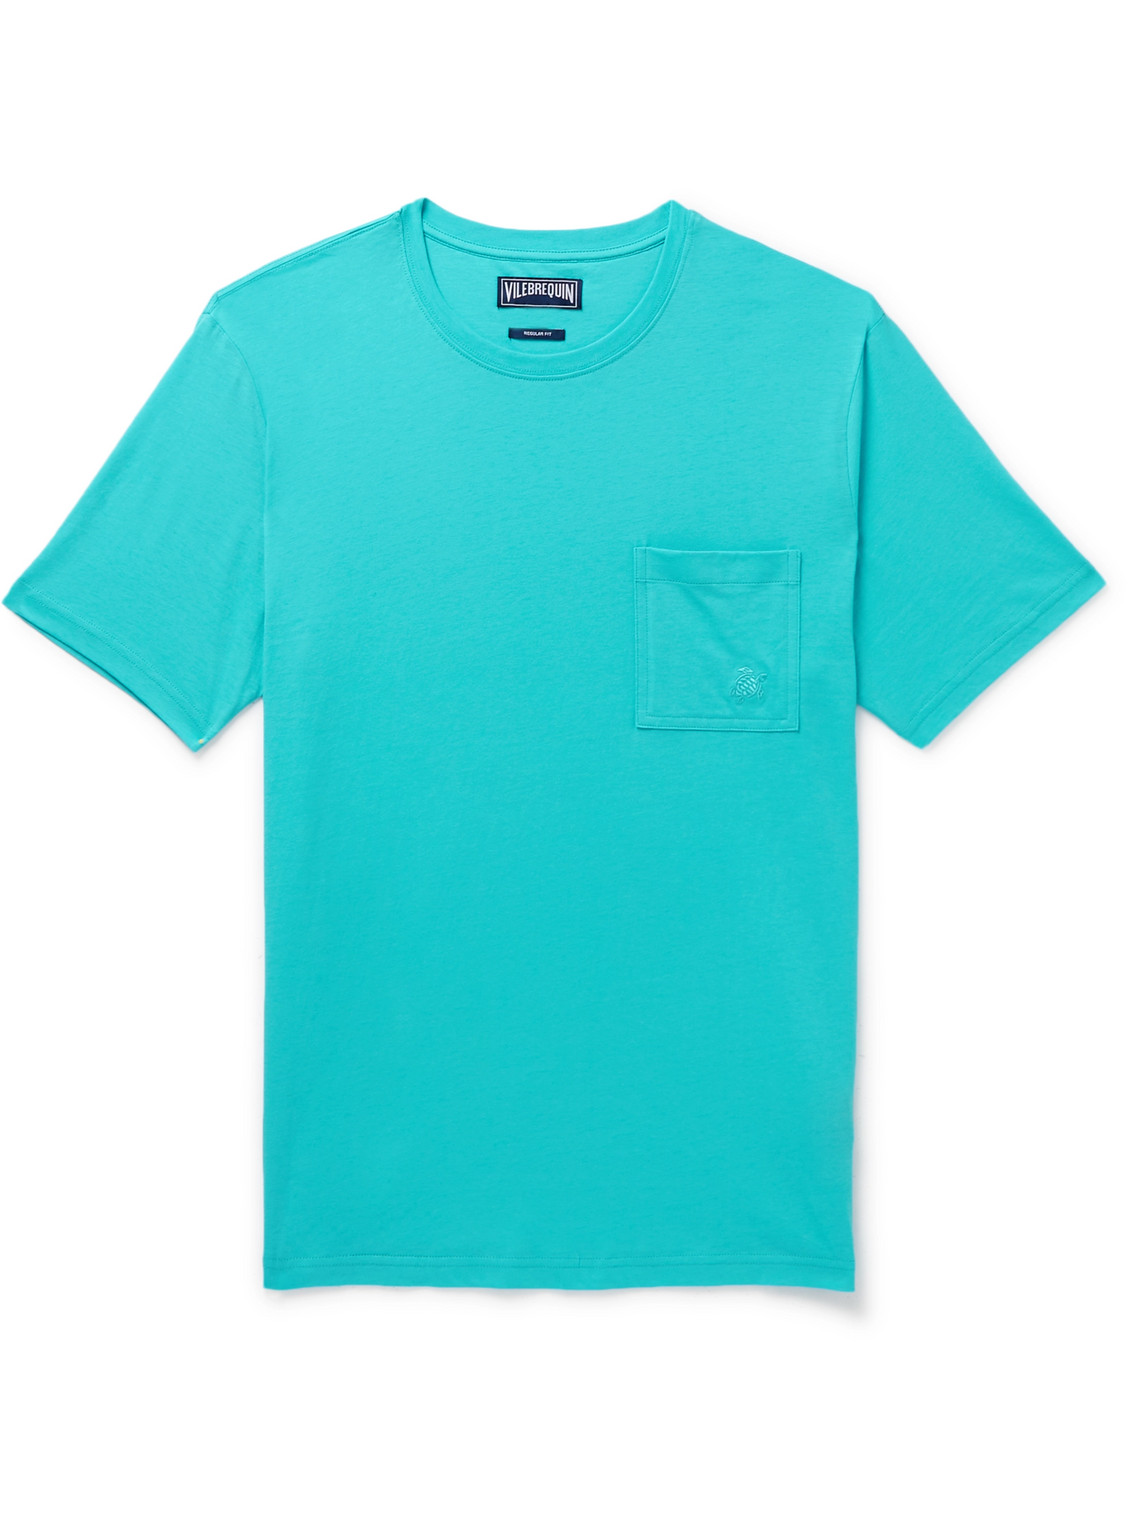 vilebrequin - titus organic cotton-jersey t-shirt - men - blue - s